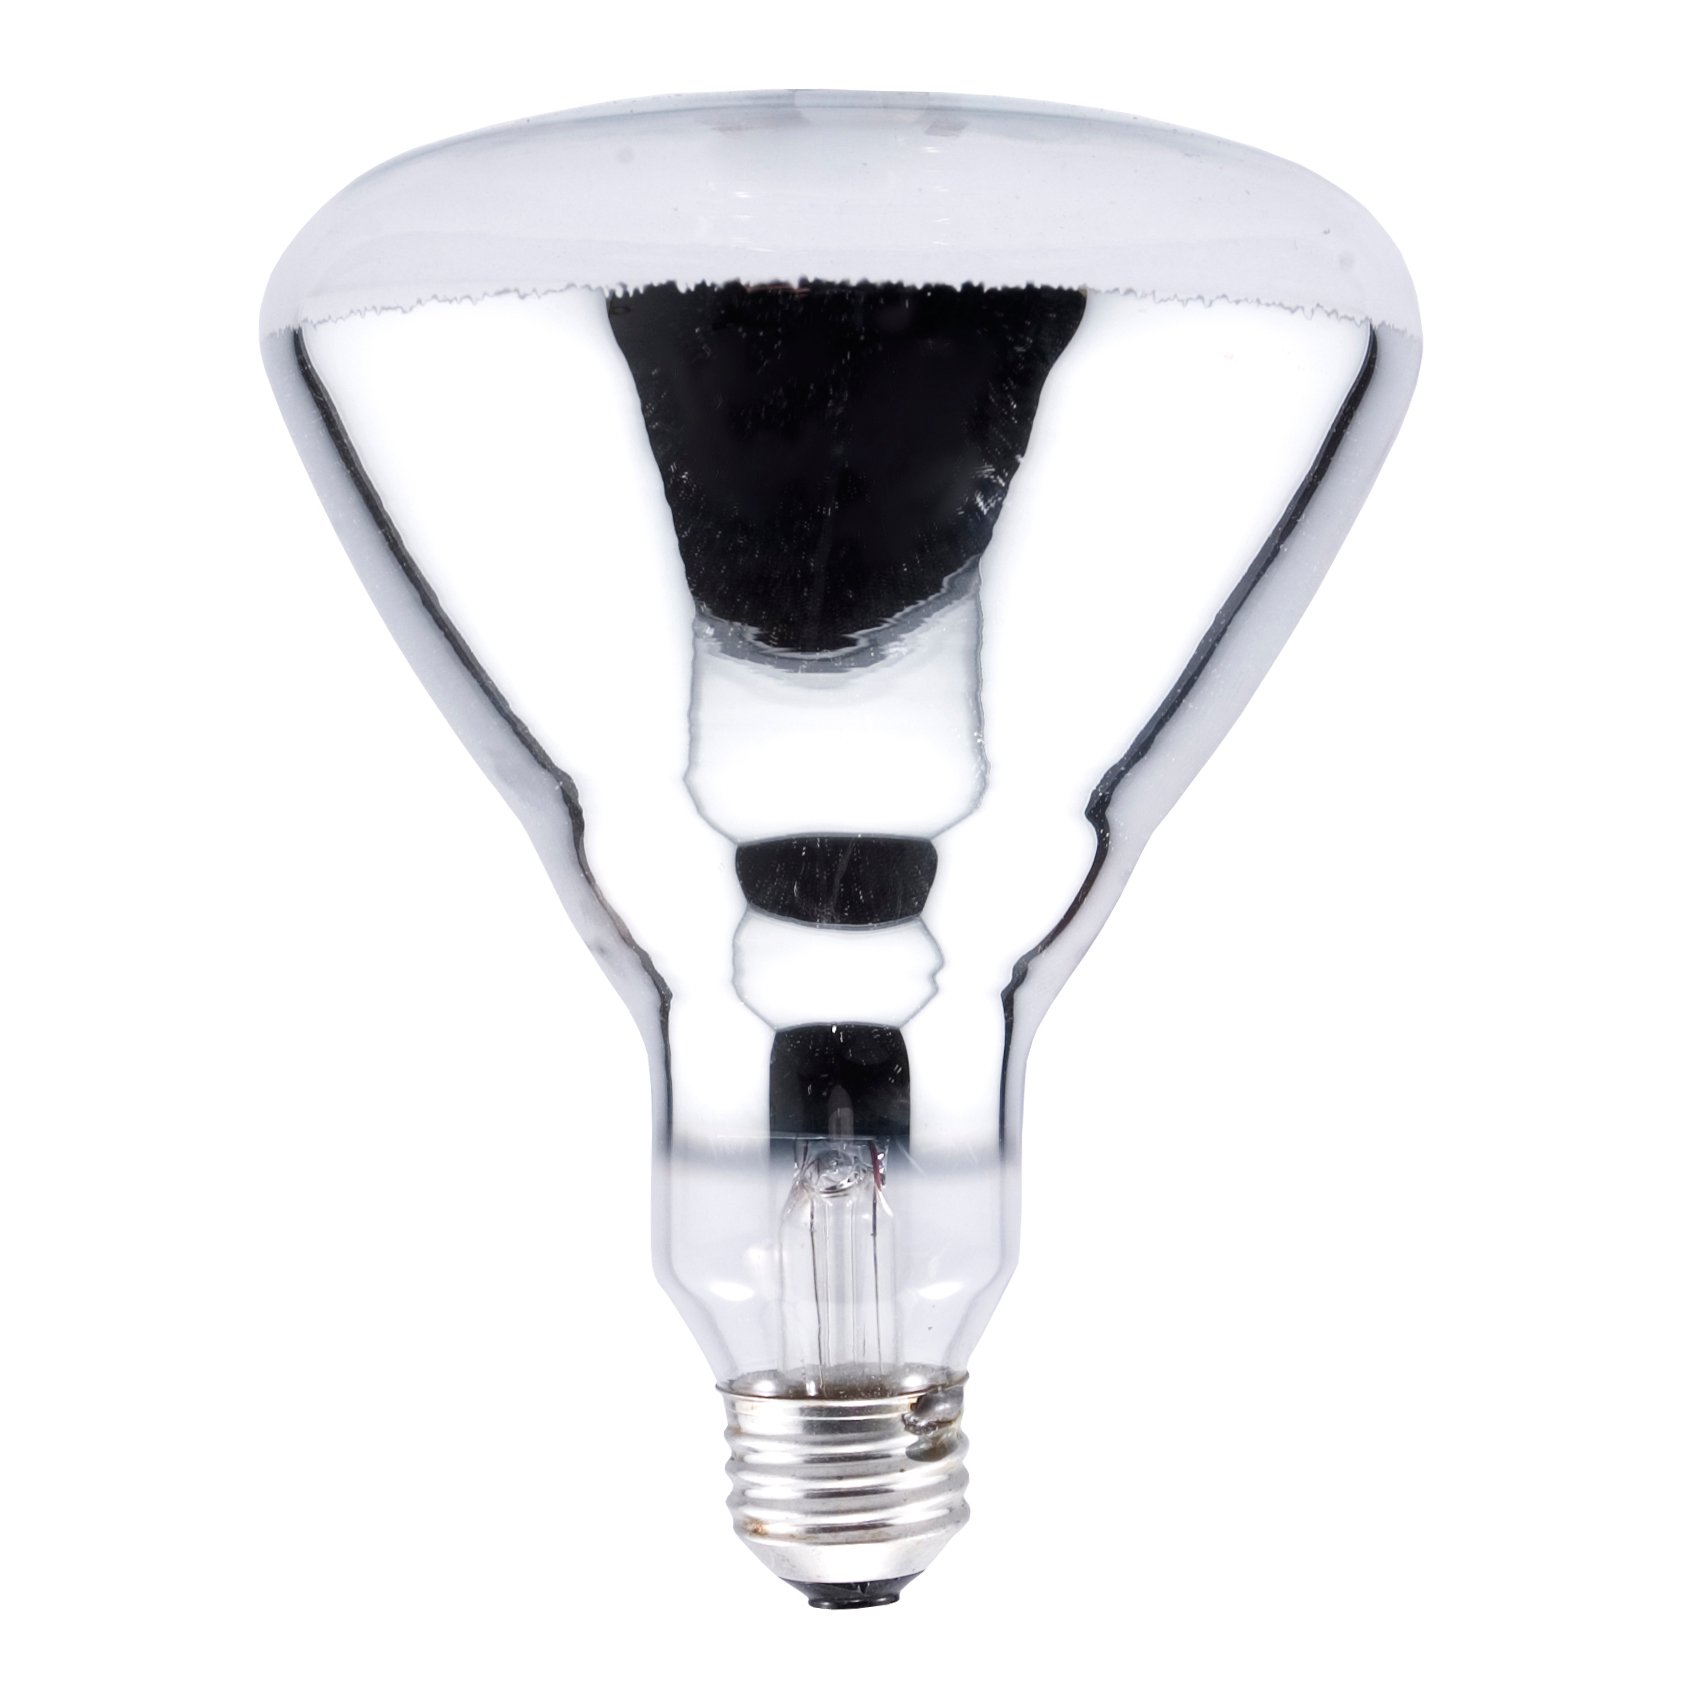 Doorzichtig verlamming Schoolonderwijs Sylvania BR40 250-Watt Infrared Heat Lamp Light Bulb - Shop Light Bulbs at  H-E-B